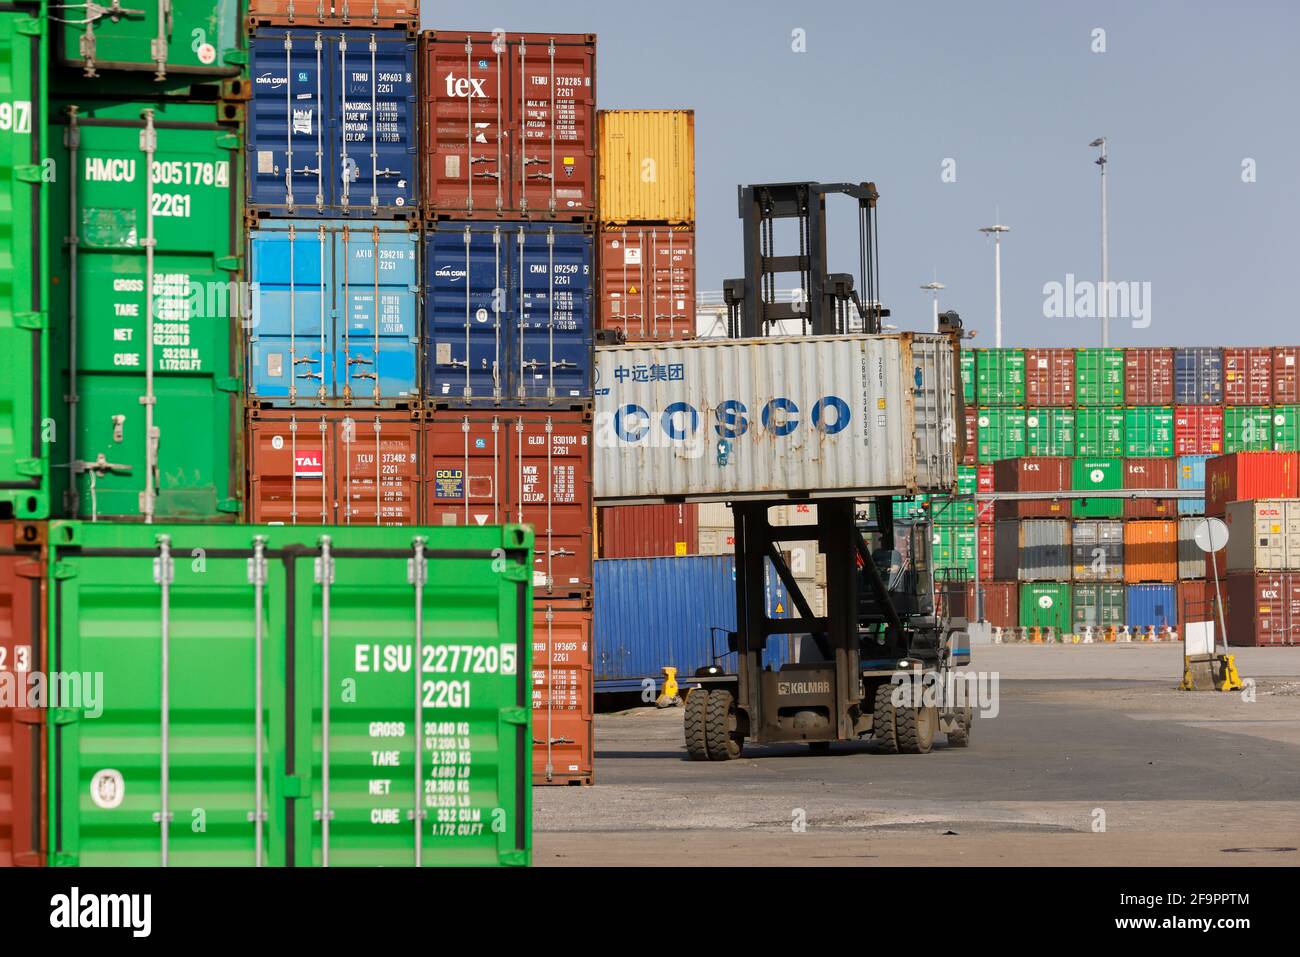 01.04.2021, Duisburg, Nordrhein-Westfalen, Deutschland - Gabelstapler transportiert COSCO-Container, China Ocean Shipping Company, Hafen Duisburg, Container Stockfoto